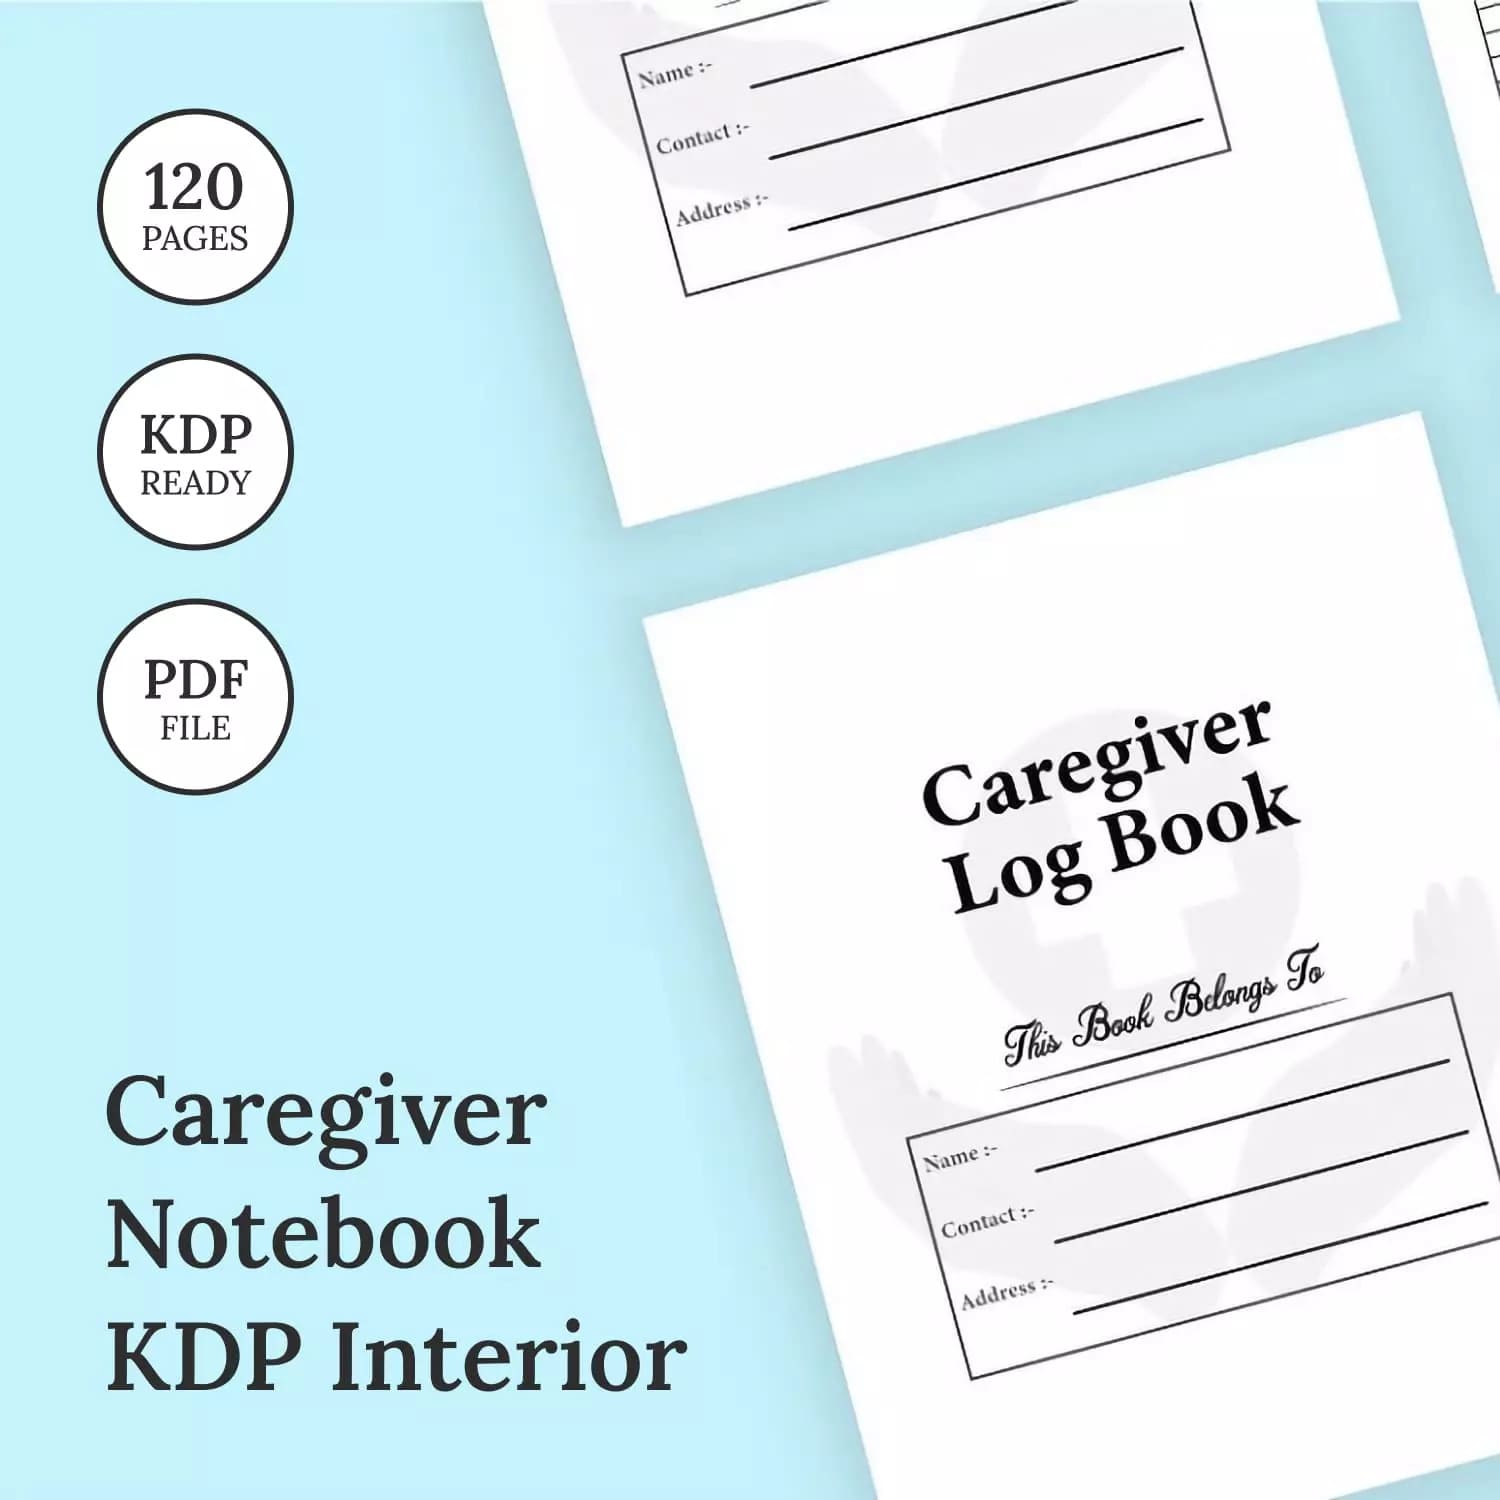 Caregiver Notebook Kdp Interior Preview image.